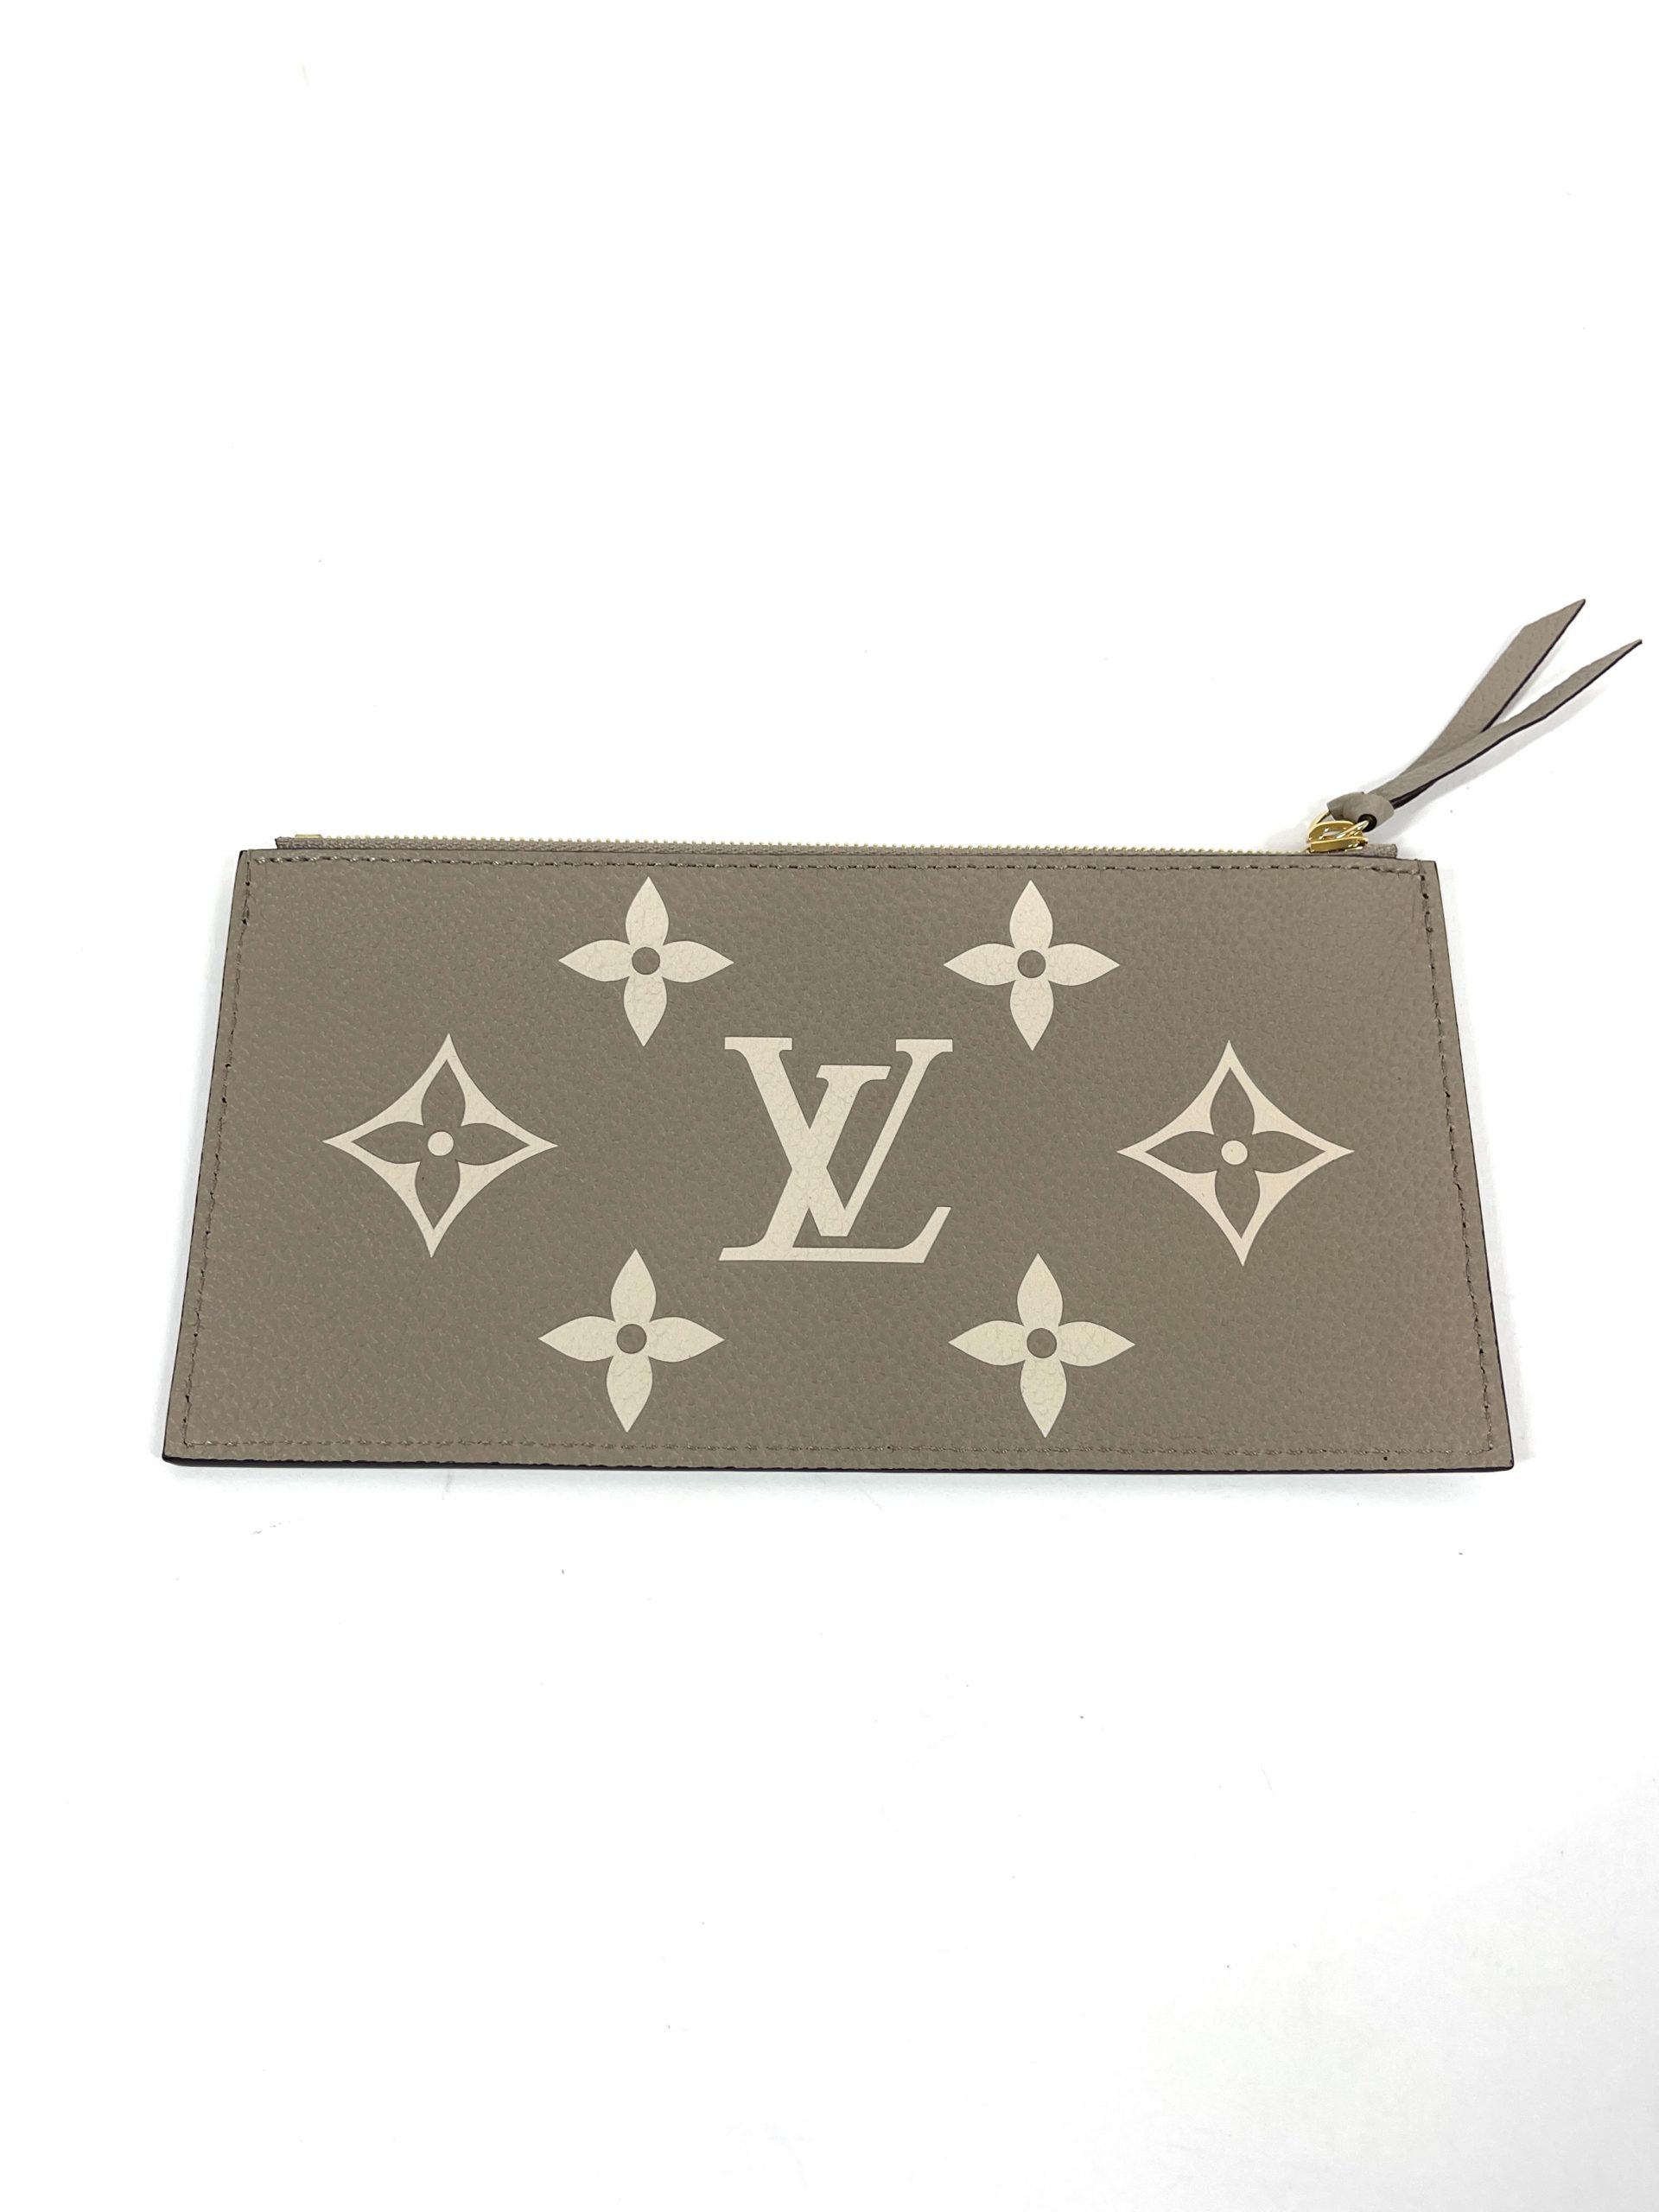 Louis Vuitton Toiletry 19 Zip Pouch in Monogram Vachette - SOLD